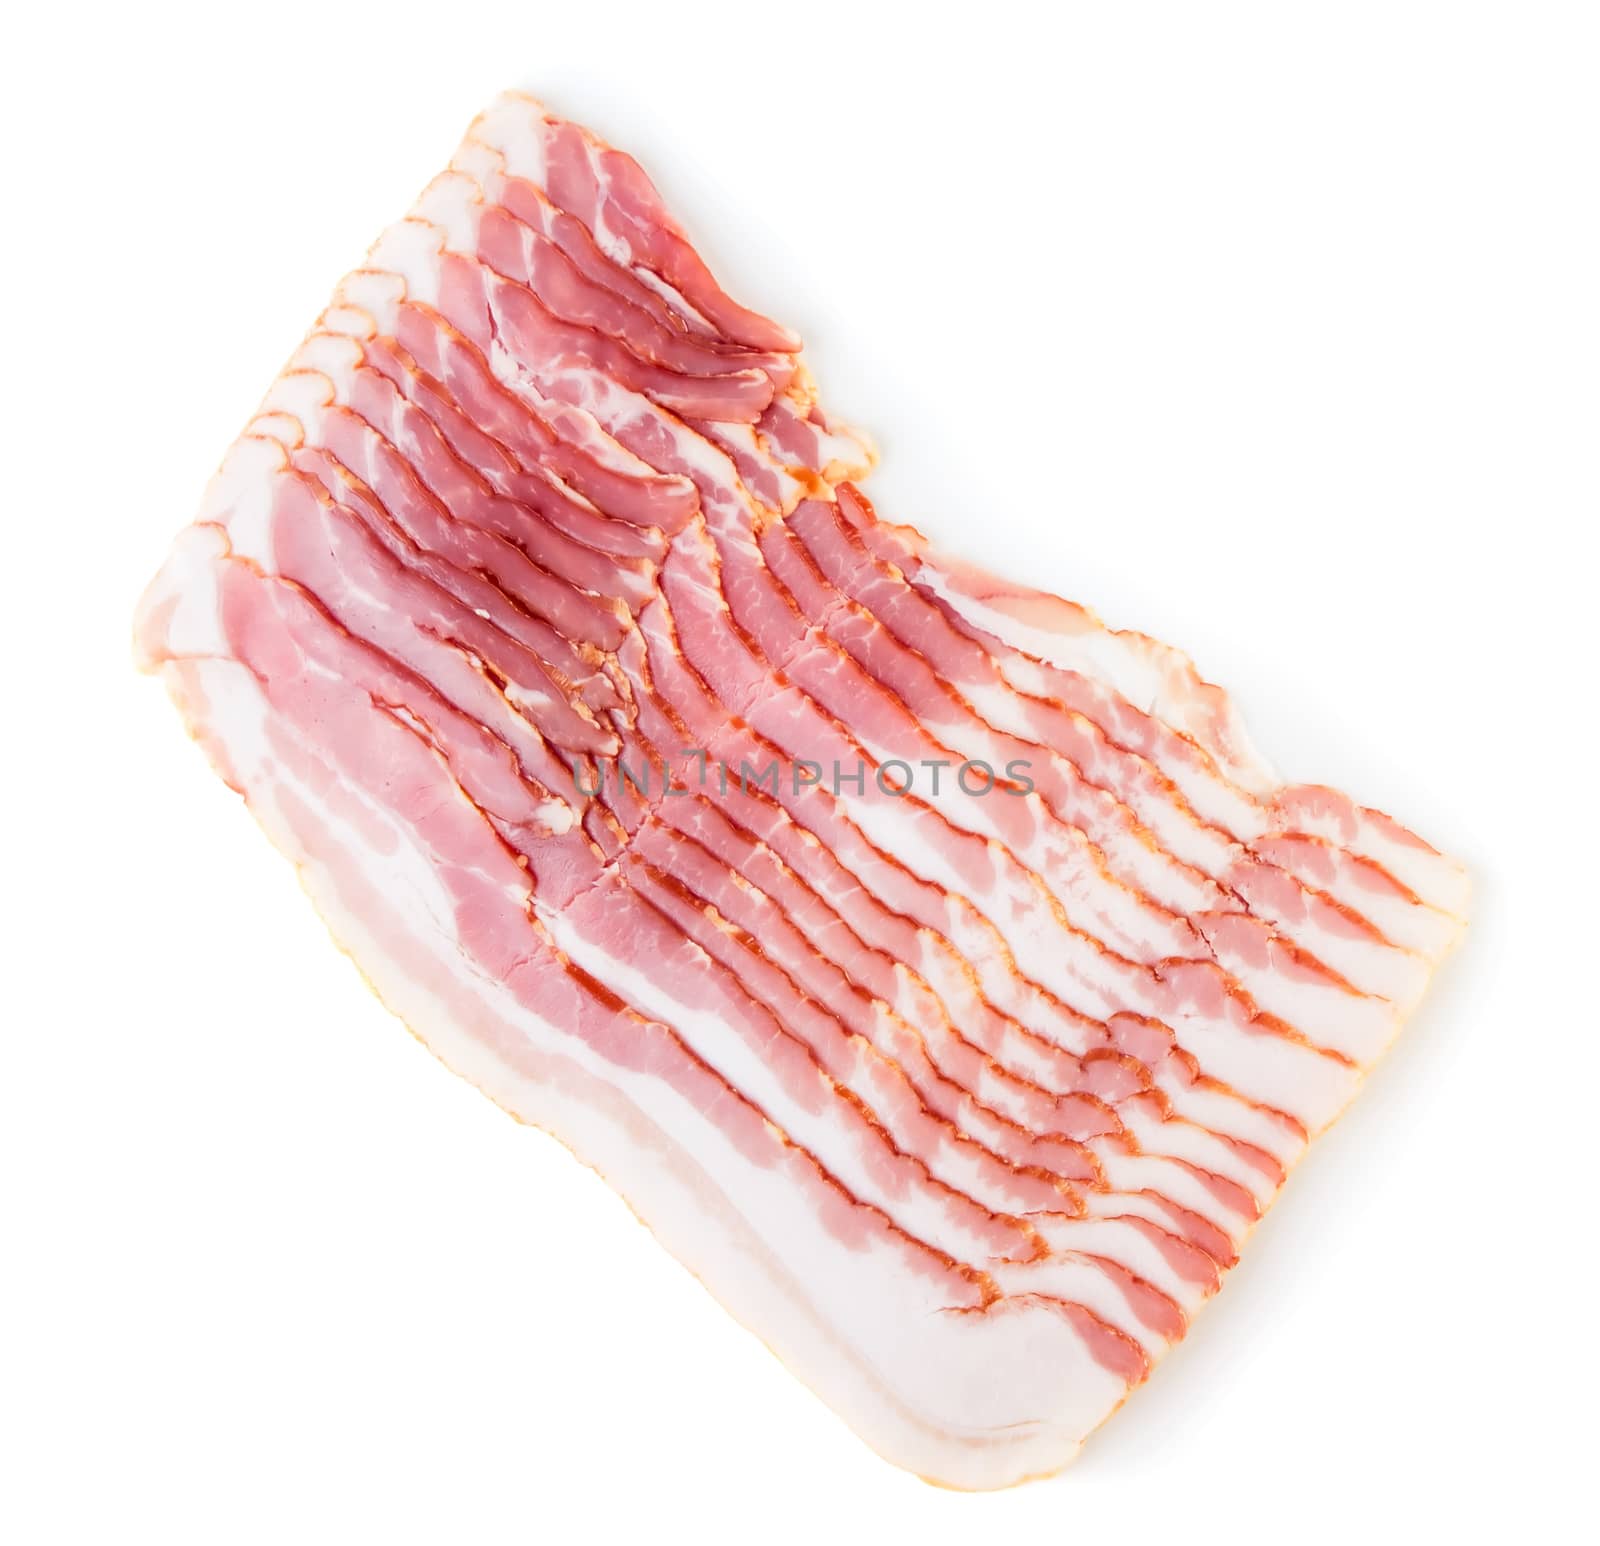 Bacon by Valengilda